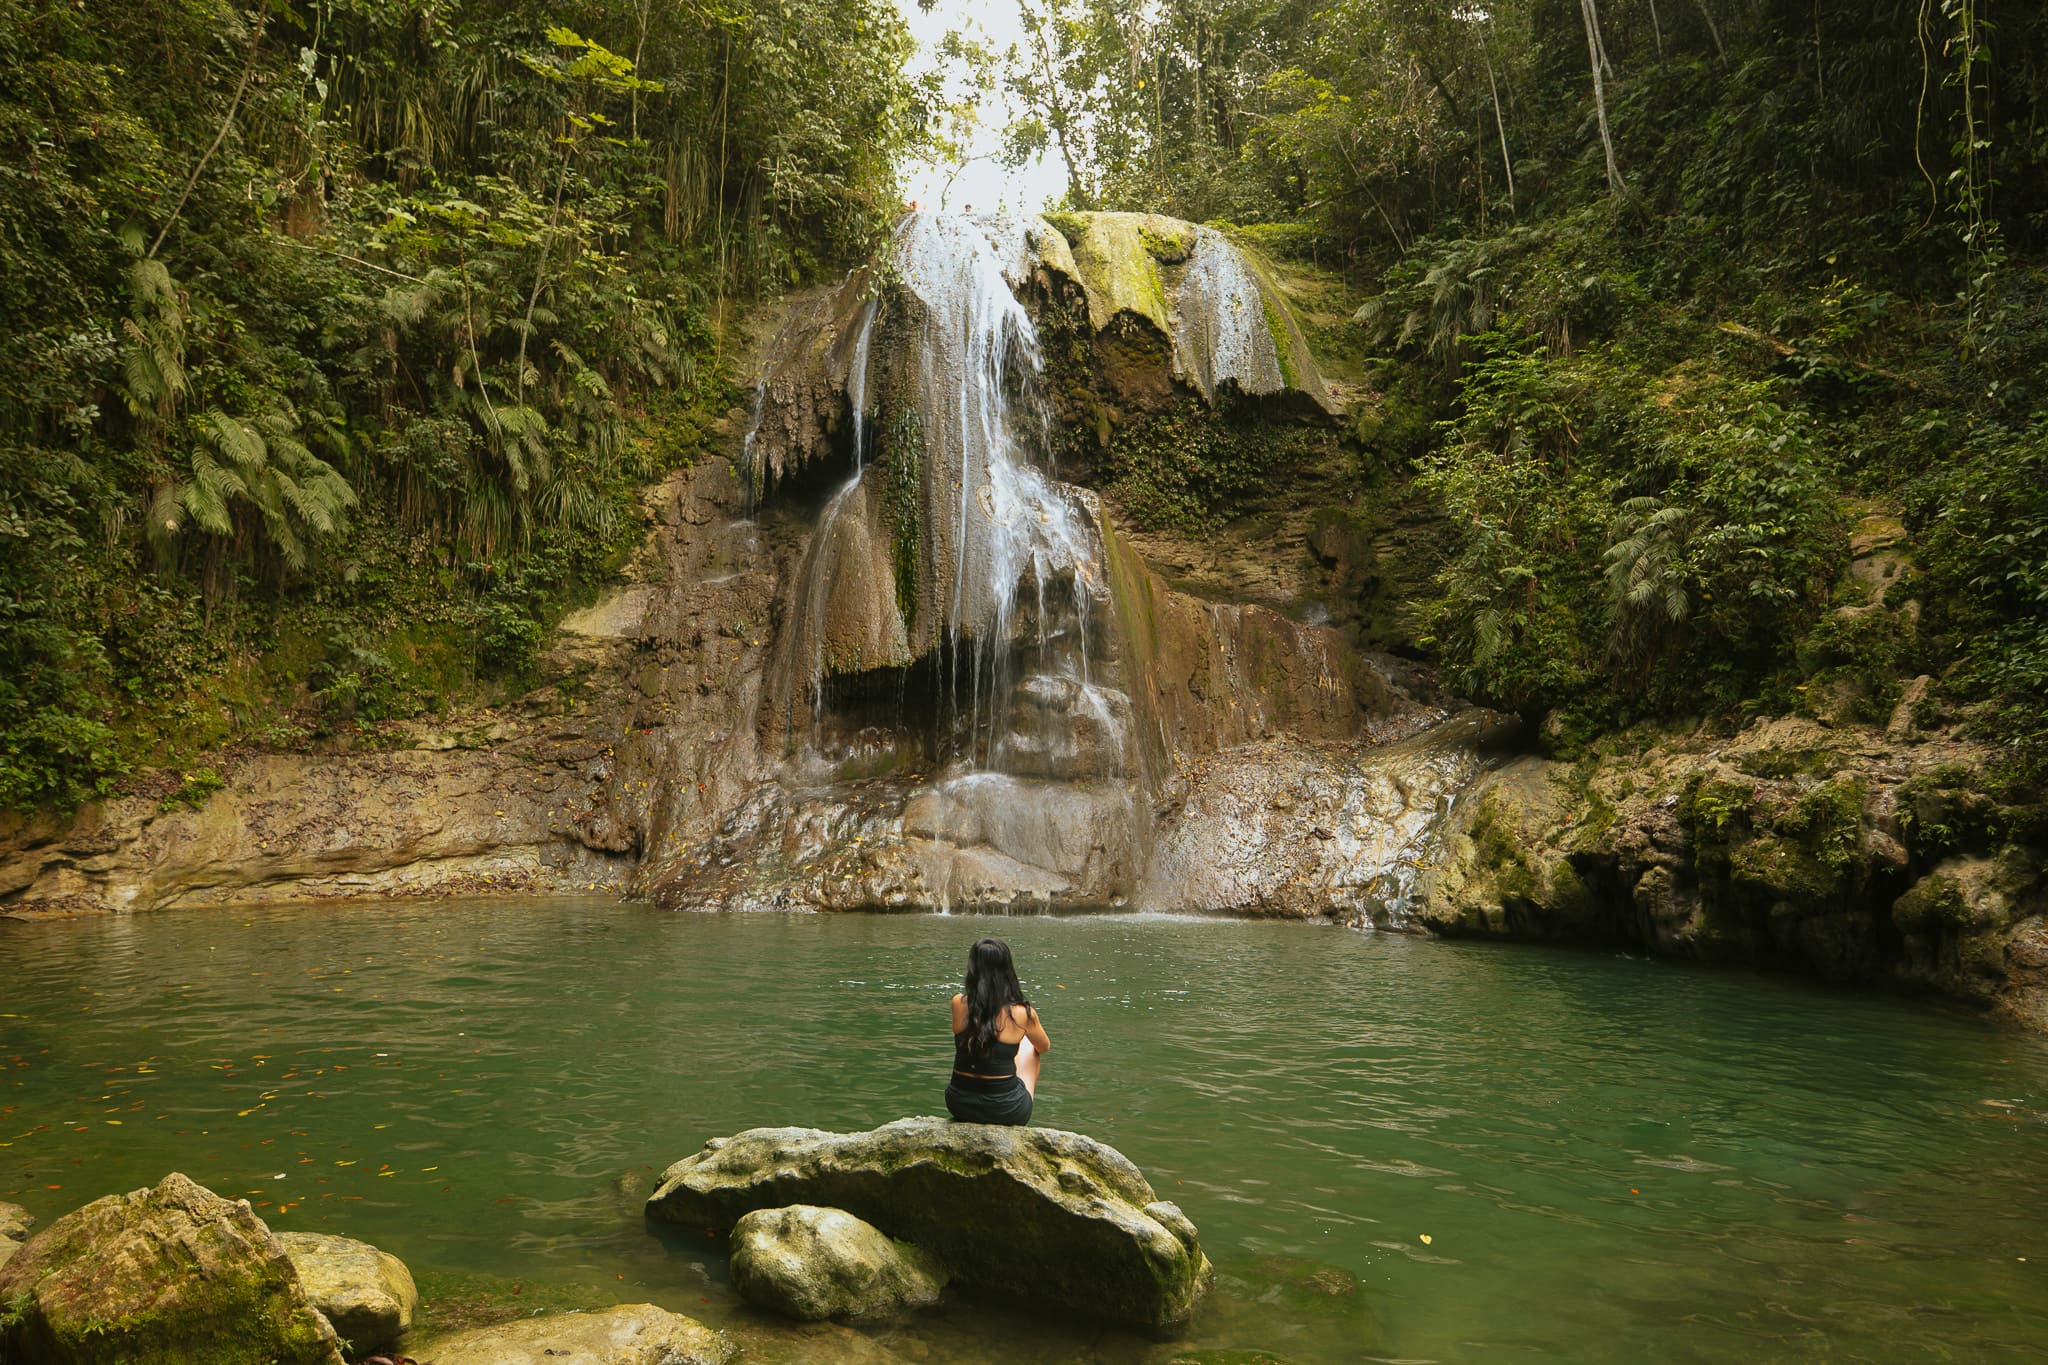 8 Things To Do In Puerto Rico Gozalandia Falls